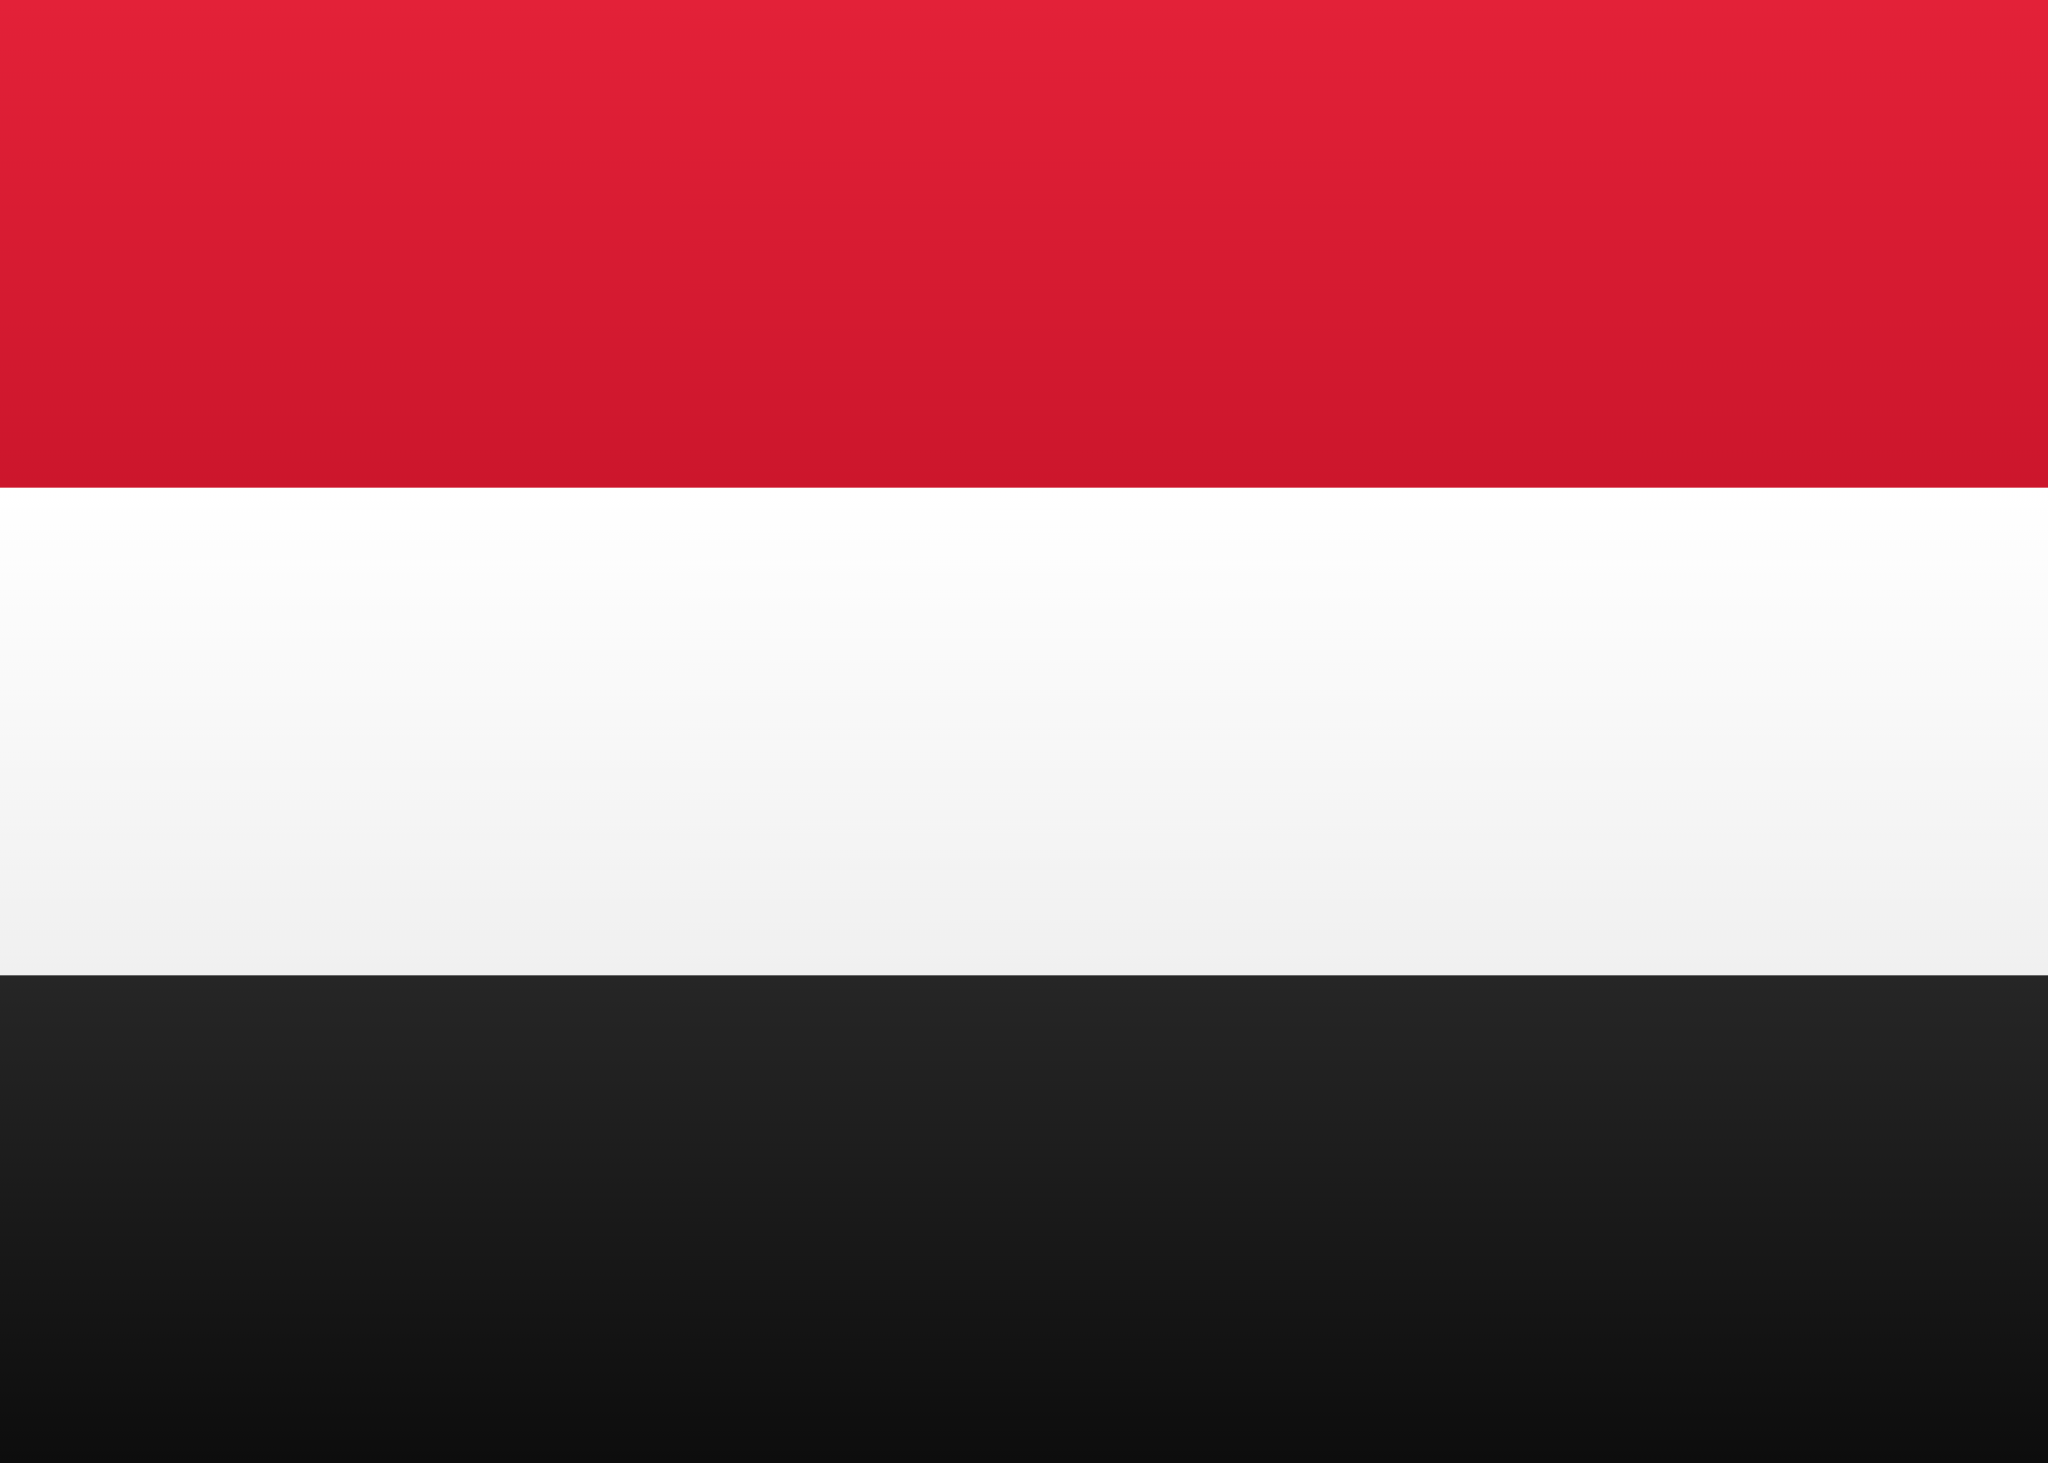 Yemen icon